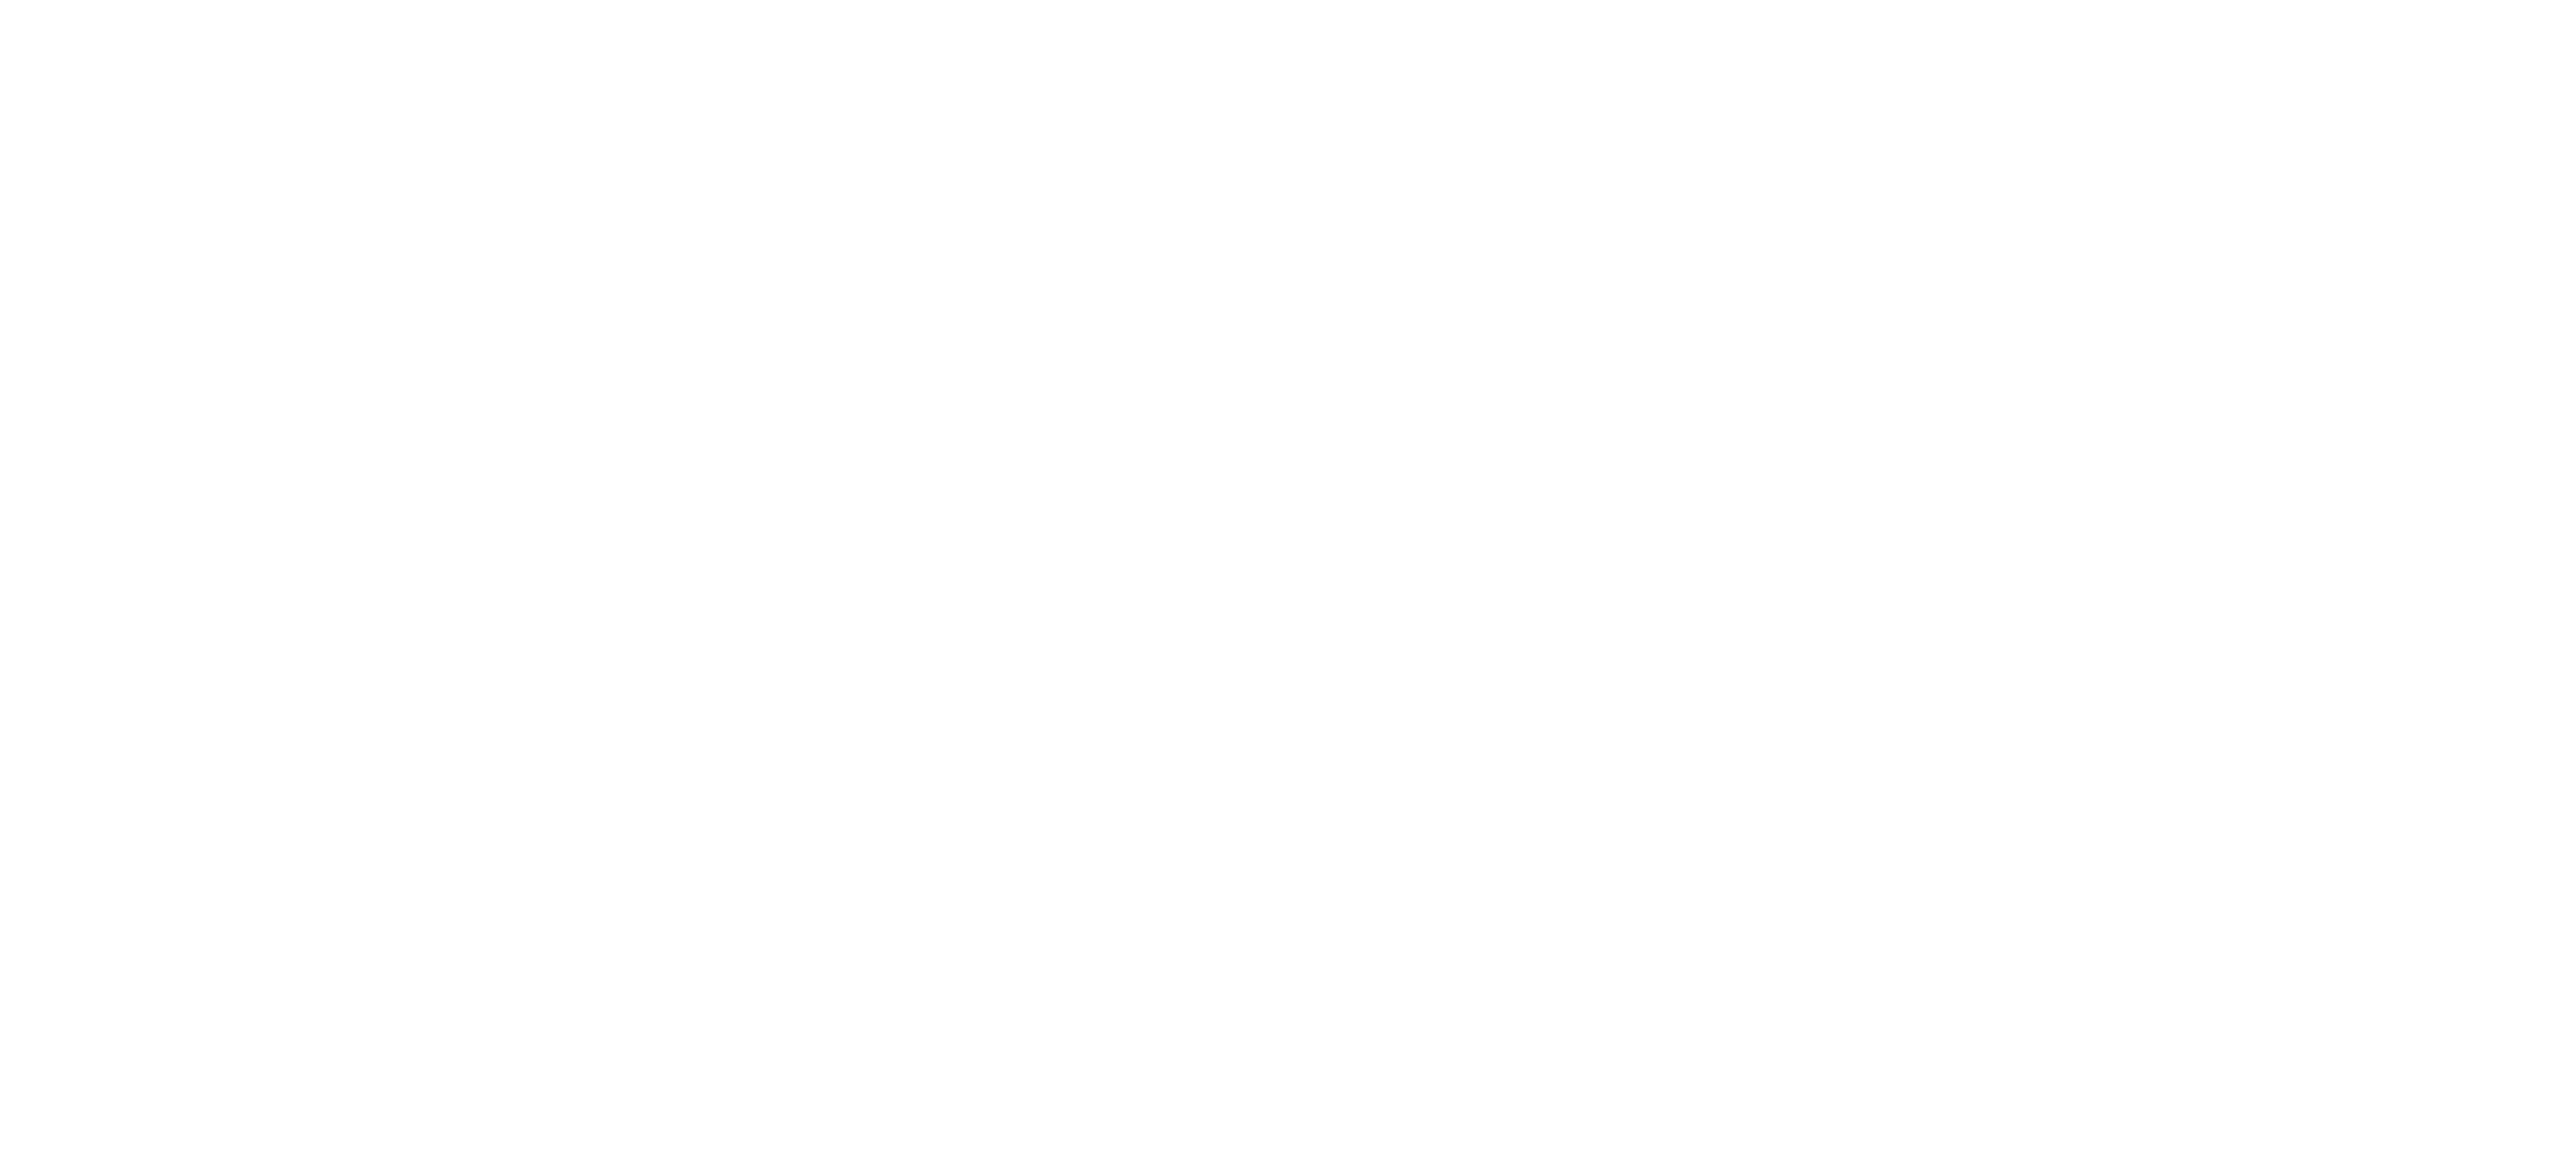 Reddick & Sons Inc.